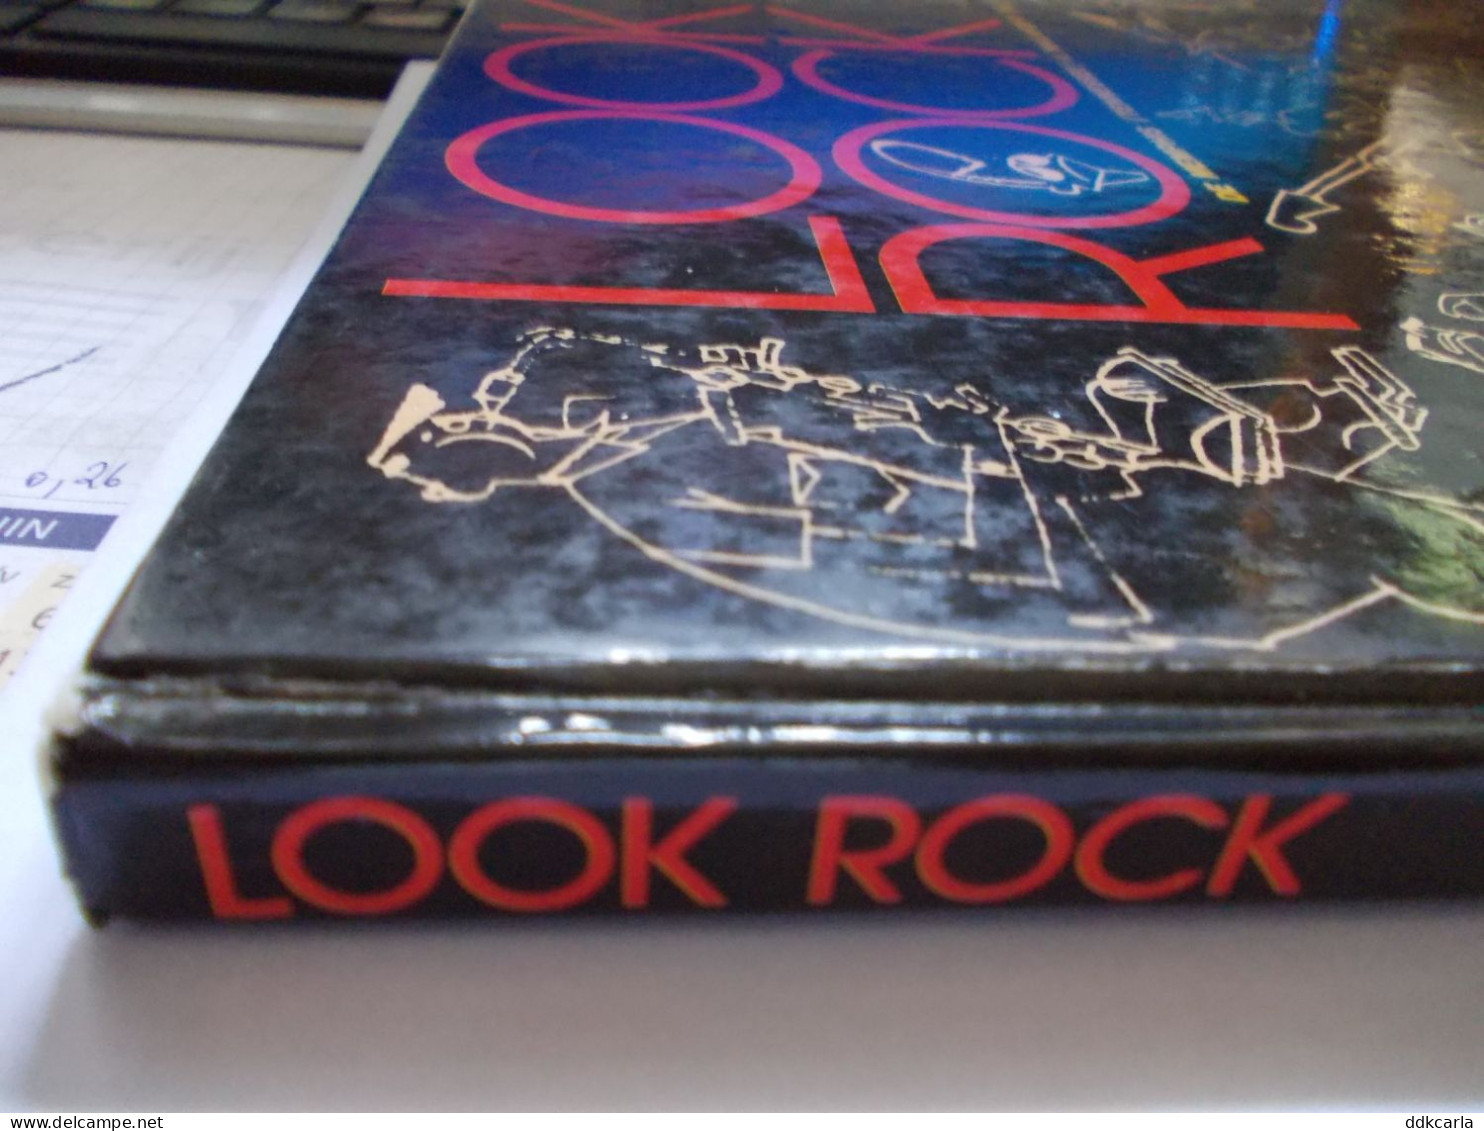 Look Rock de Memphis (Tennessee) à Malakoff (92) - Temps Futurs 1984 - en trés bonne état